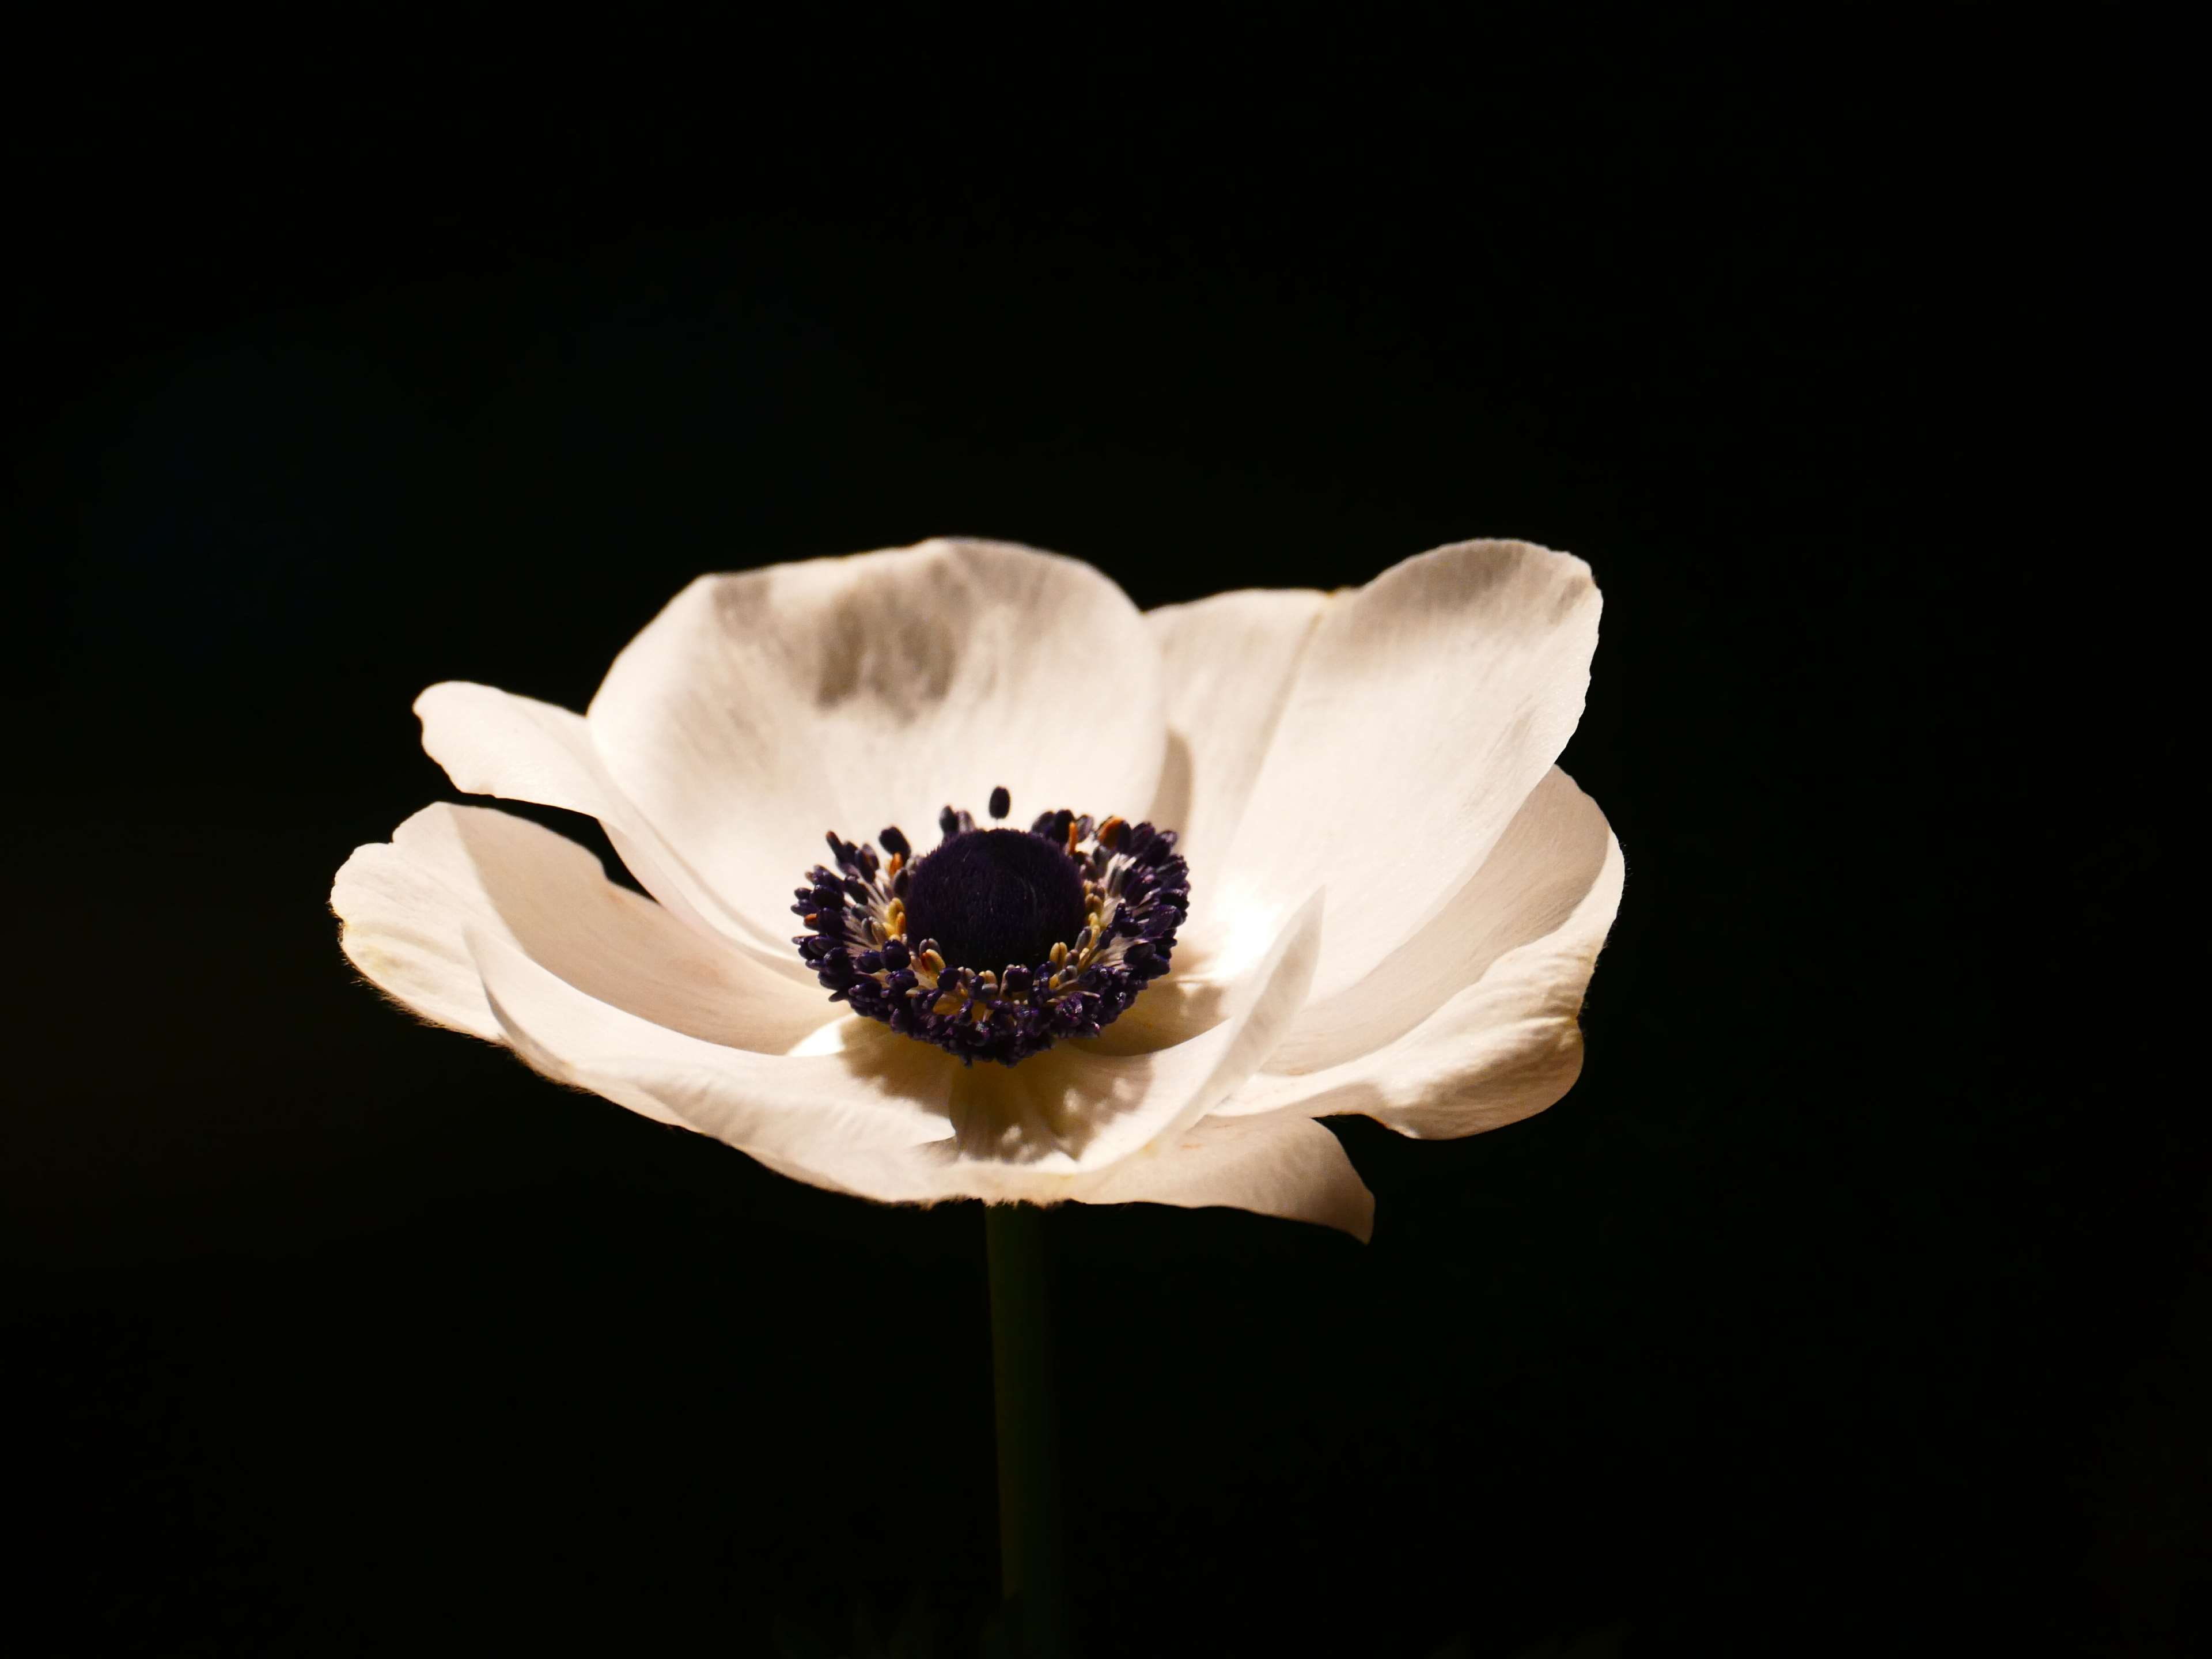 anemone, bloom, blossom, crown anemone, flower, white, flowering plant